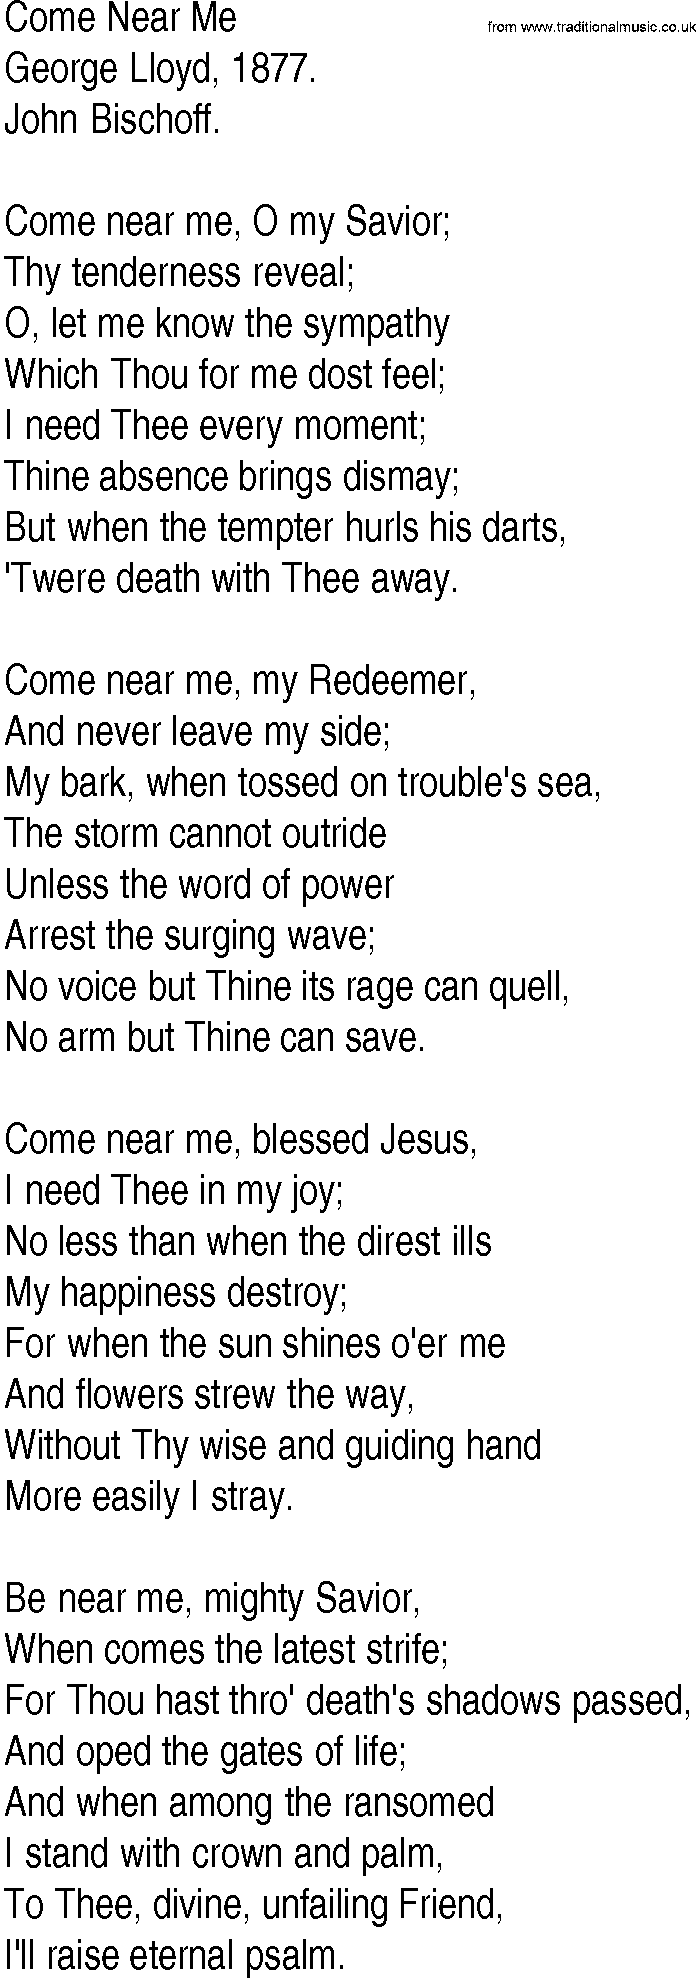 Hymn and Gospel Song: Come Near Me by George Lloyd lyrics